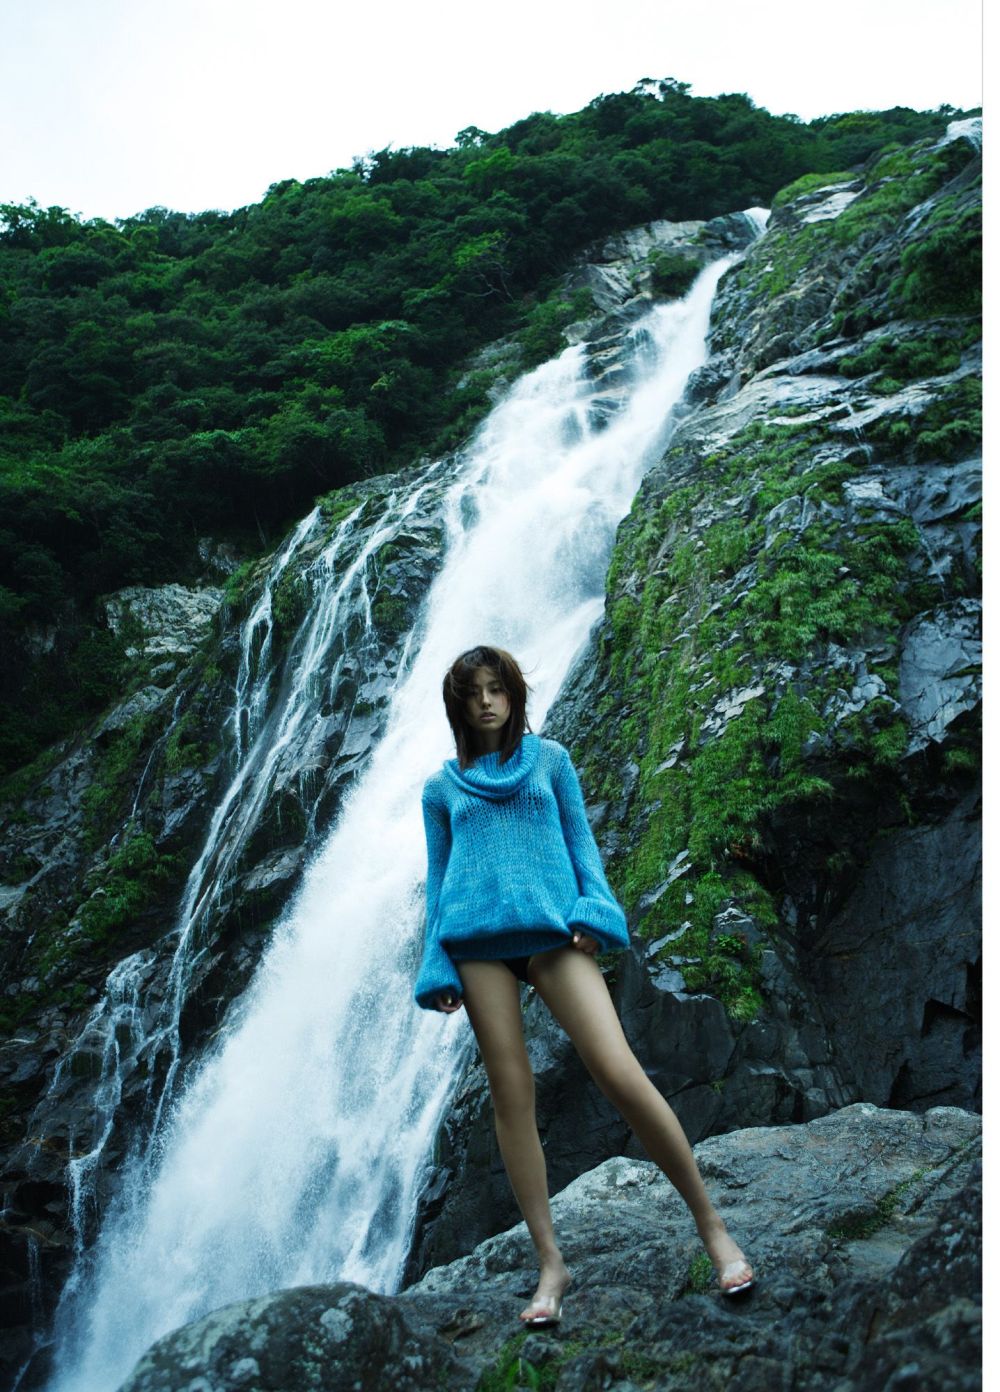 Ayumi Kinoshita Sexy and Hottest Photos , Latest Pics